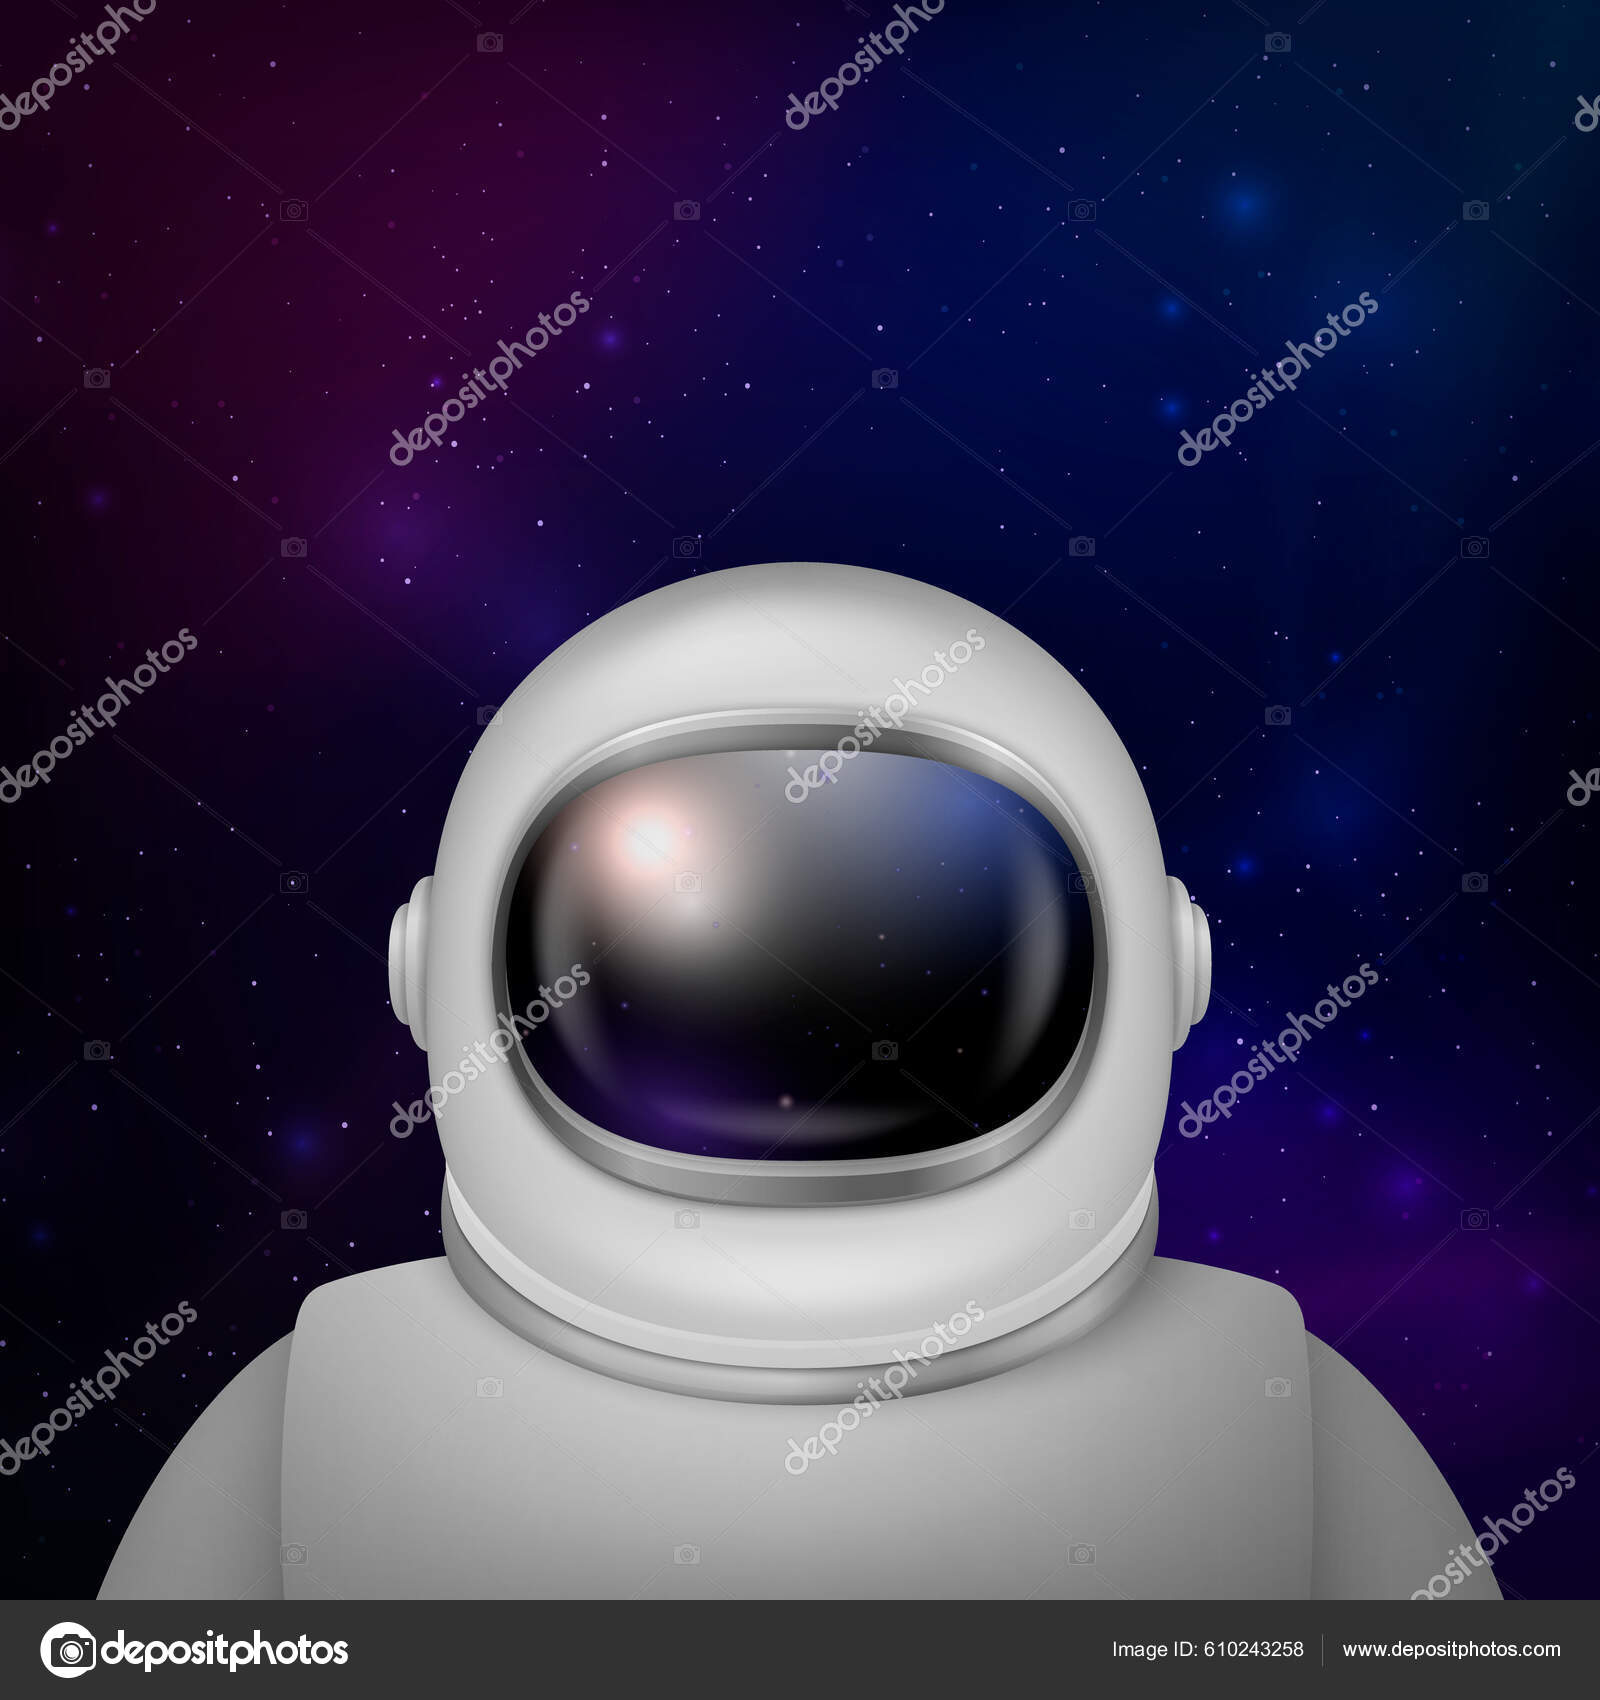 https://st.depositphotos.com/3539679/61024/v/1600/depositphotos_610243258-stock-illustration-vector-realistic-spaceman-astronaut-spacesuit.jpg